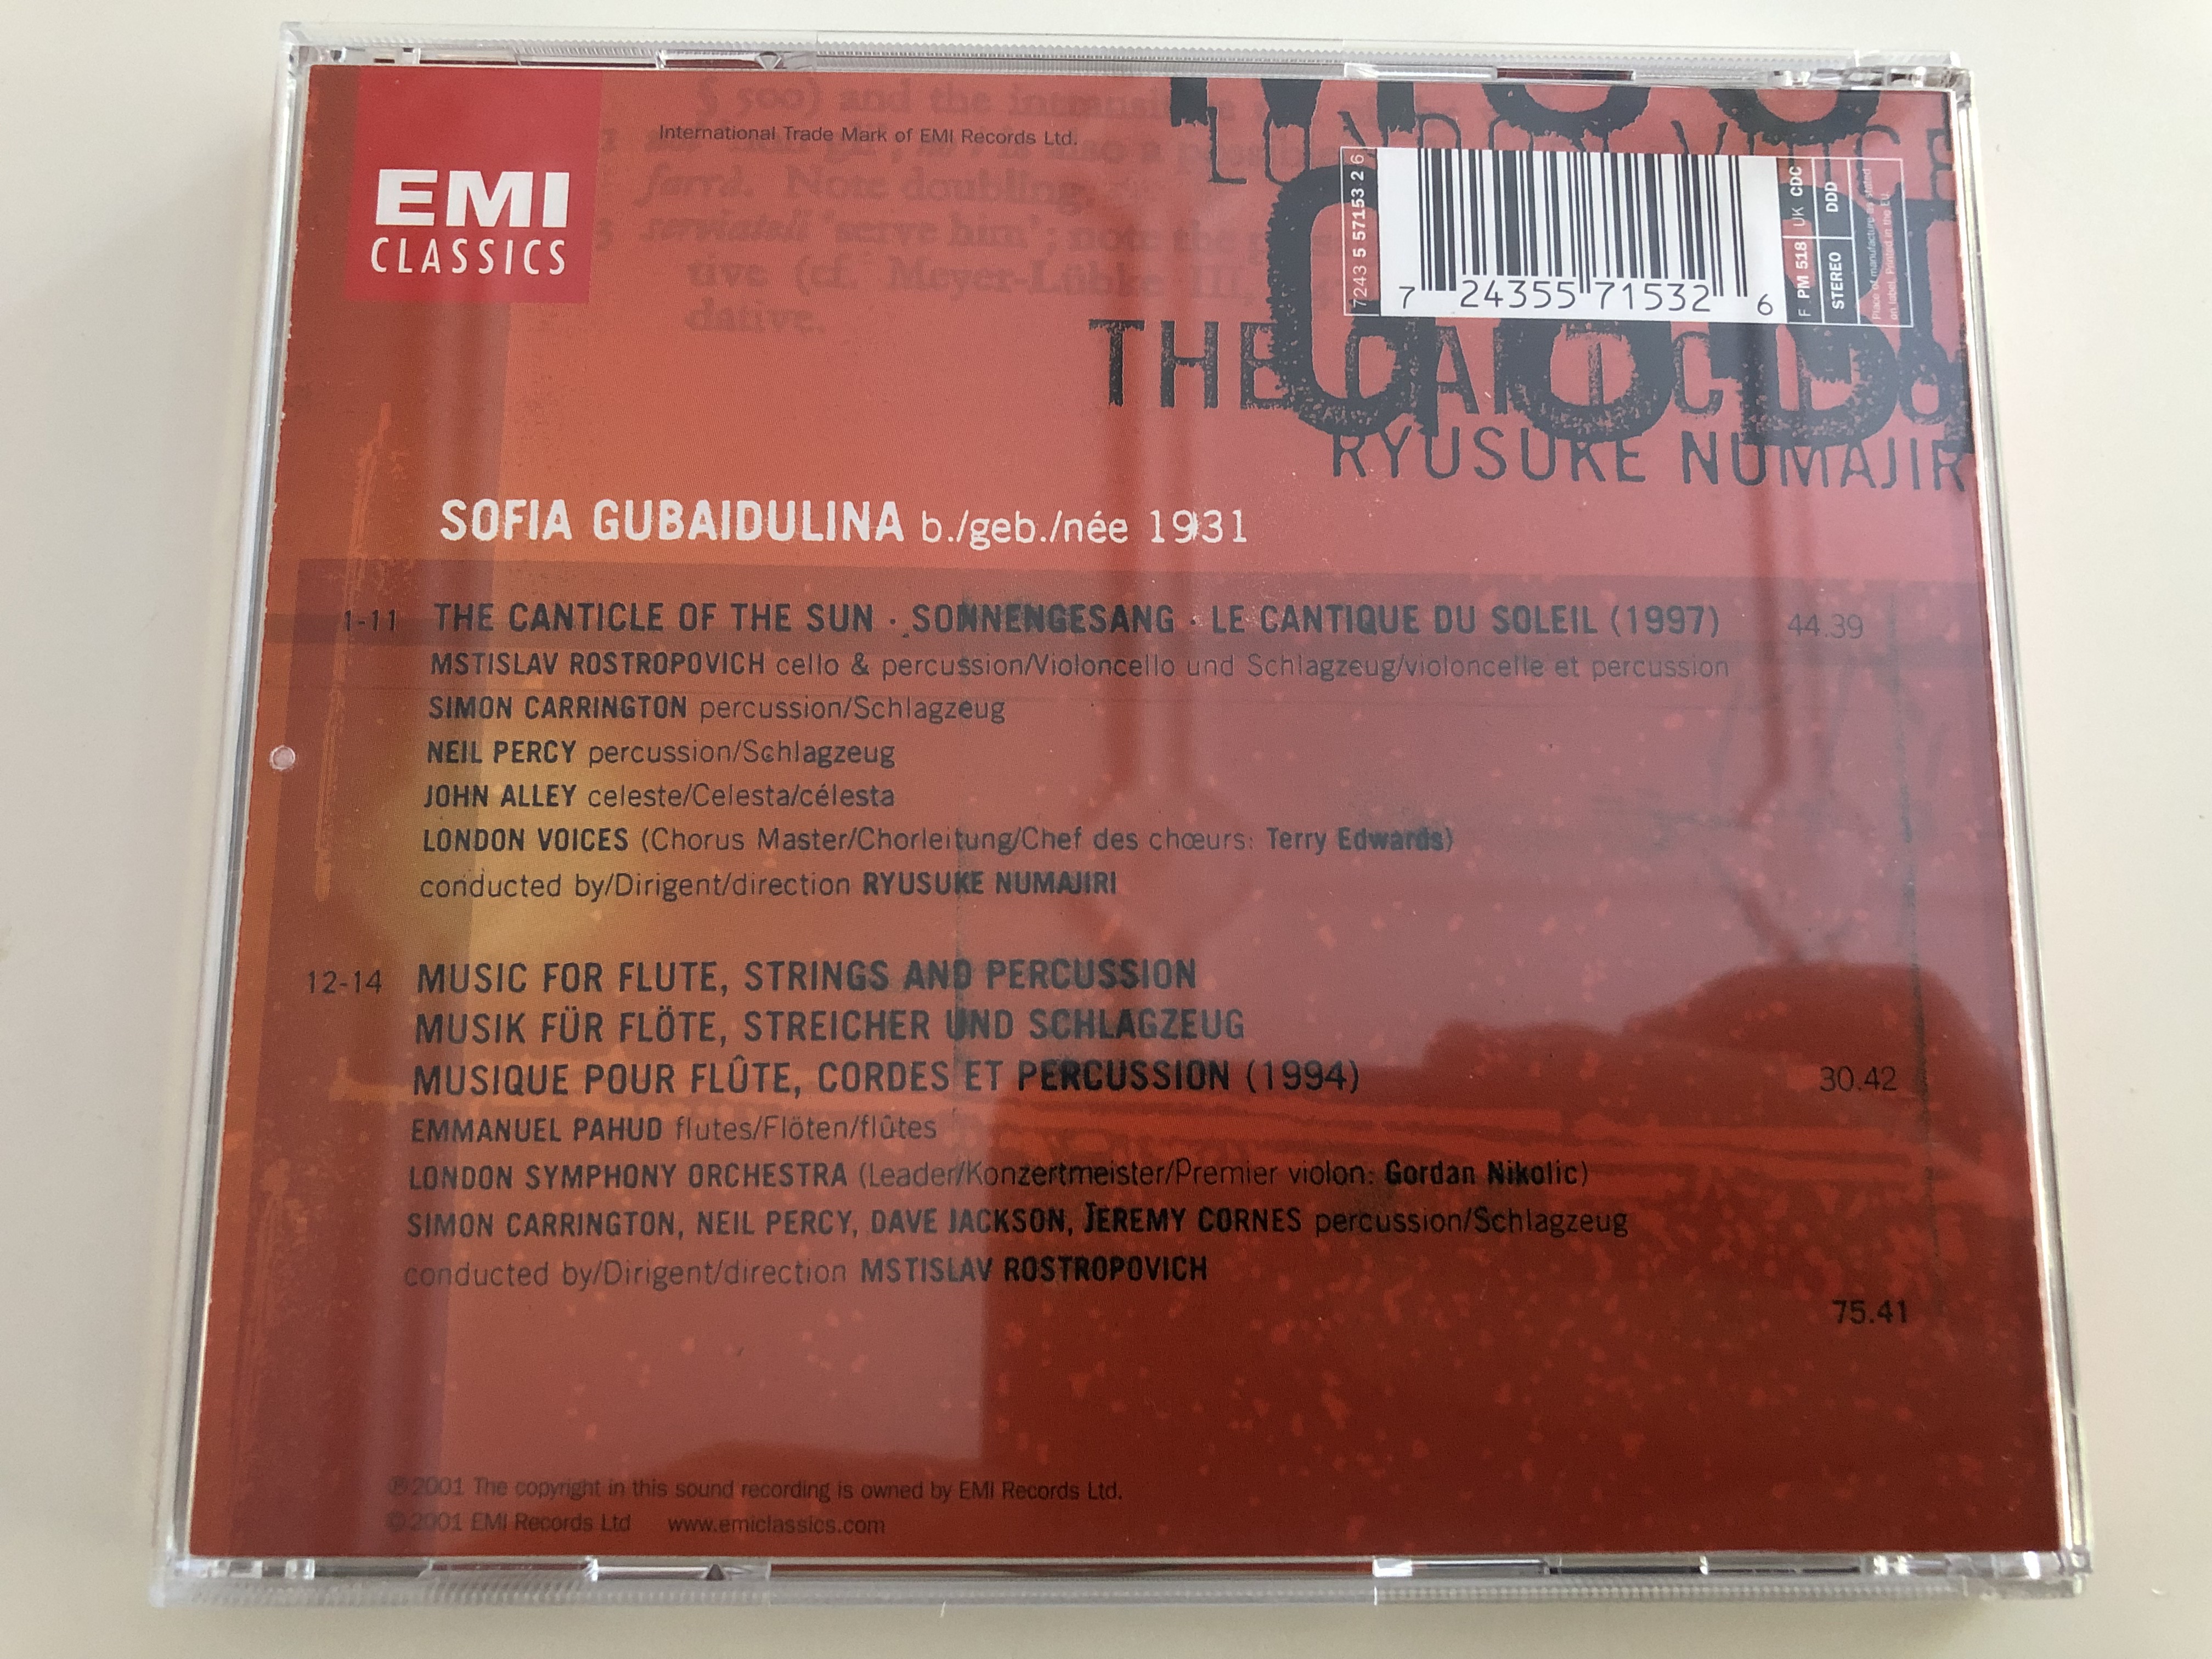 sofia-gubaidulina-the-canticle-of-the-sun-music-for-flute-strings-and-percussion-emmanuel-pahud-mstislav-rostopovich-london-voices-london-symphony-orchestra-ryusuke-numajiri-emi-classics-audio-cd-2001-7-.jpg